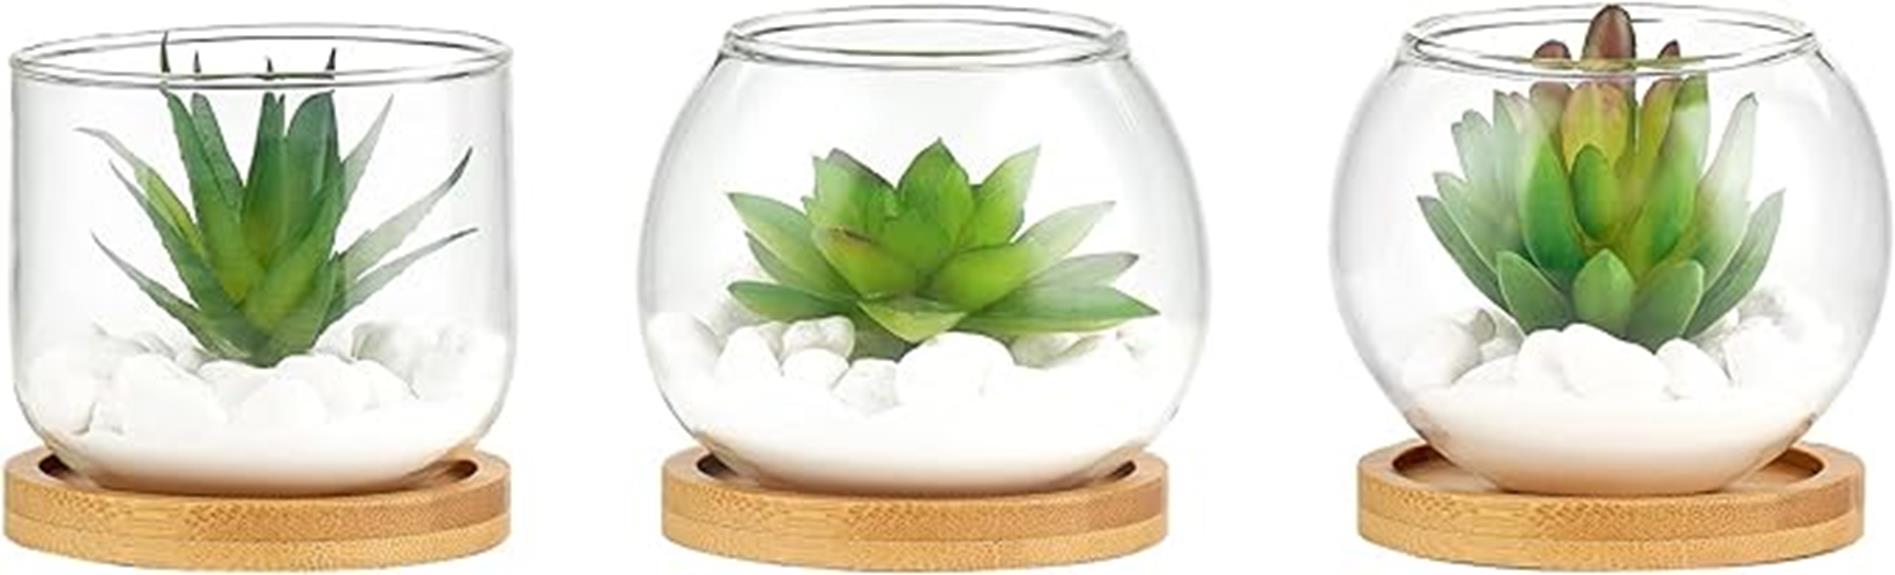 artificial succulent trio in glass pot